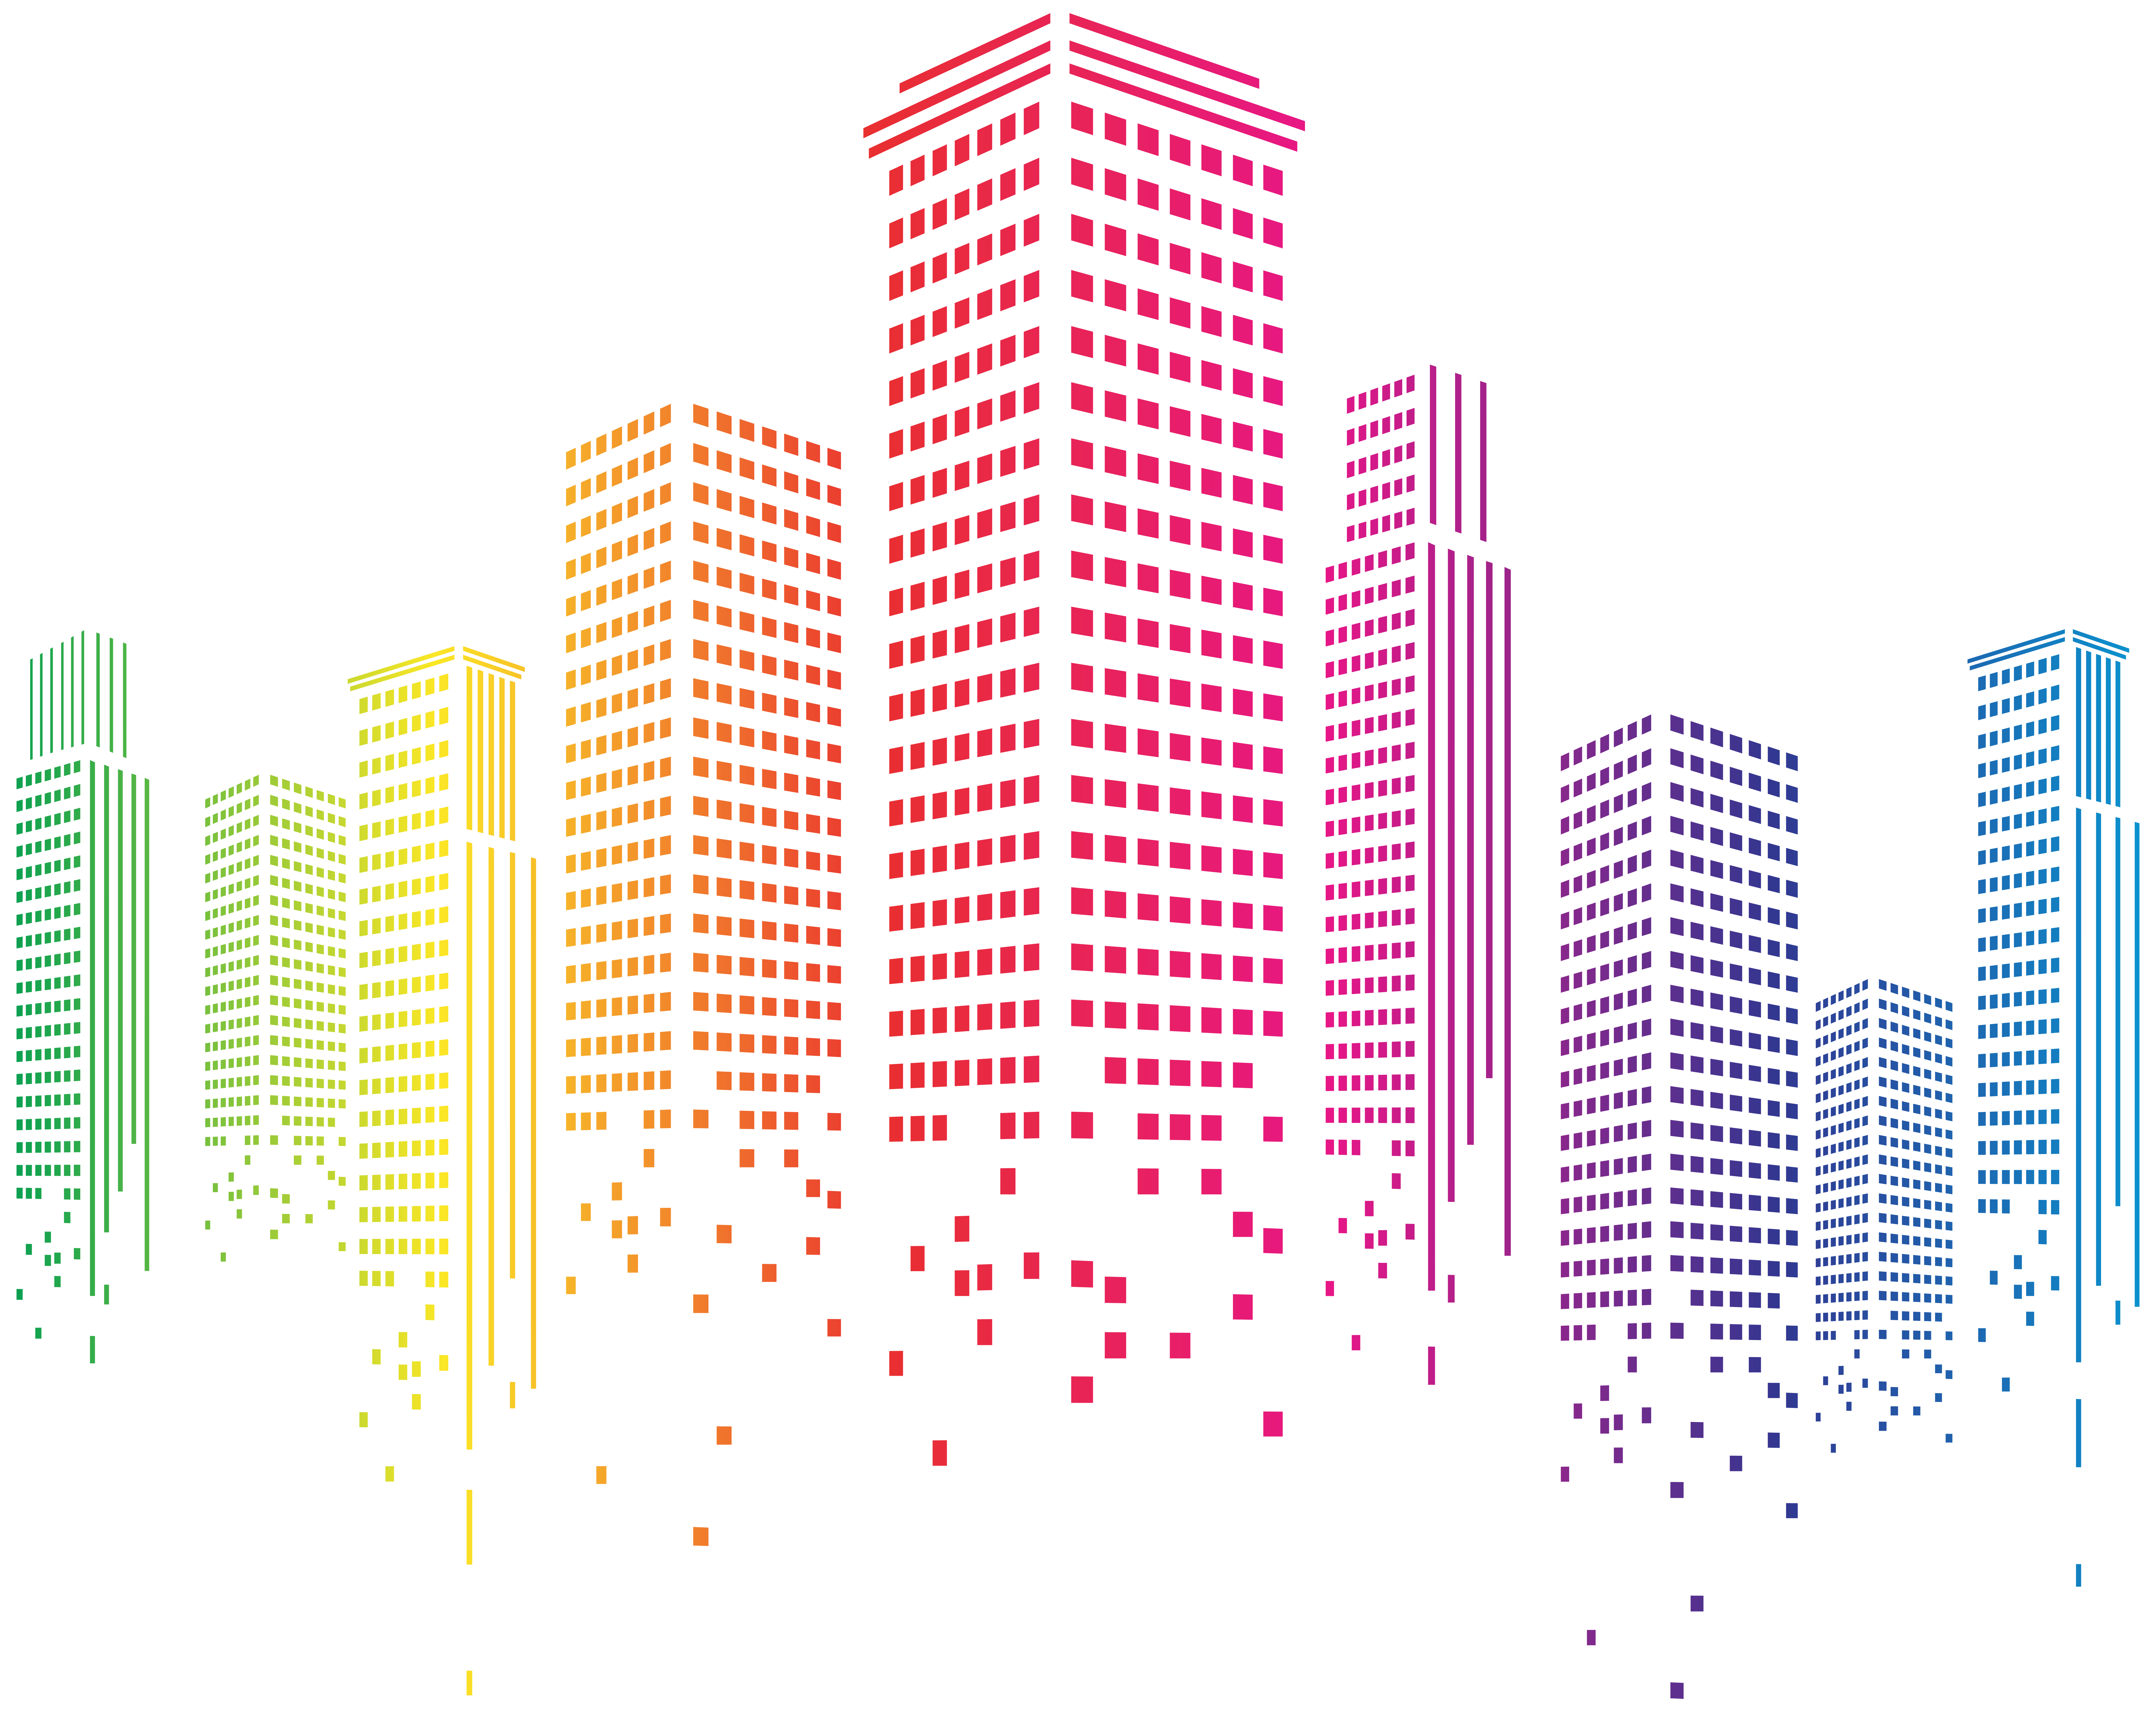 Multicolored Buildings Decor PNG Clip Art Image.